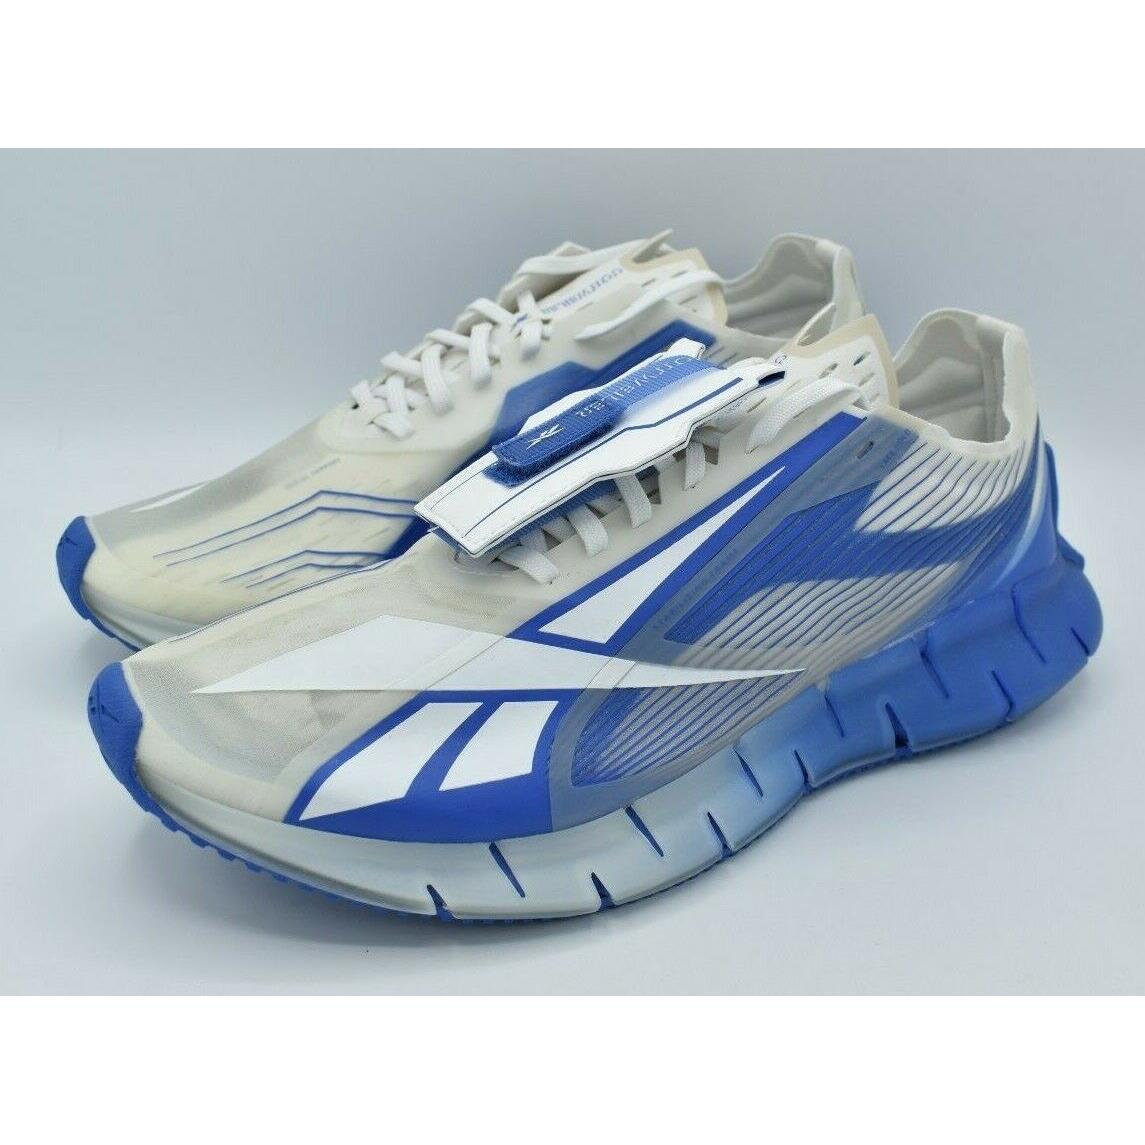 Reebok Mens Size 10 Cottweiler Zig 3D Storm X Blue Blast White Running Shoes